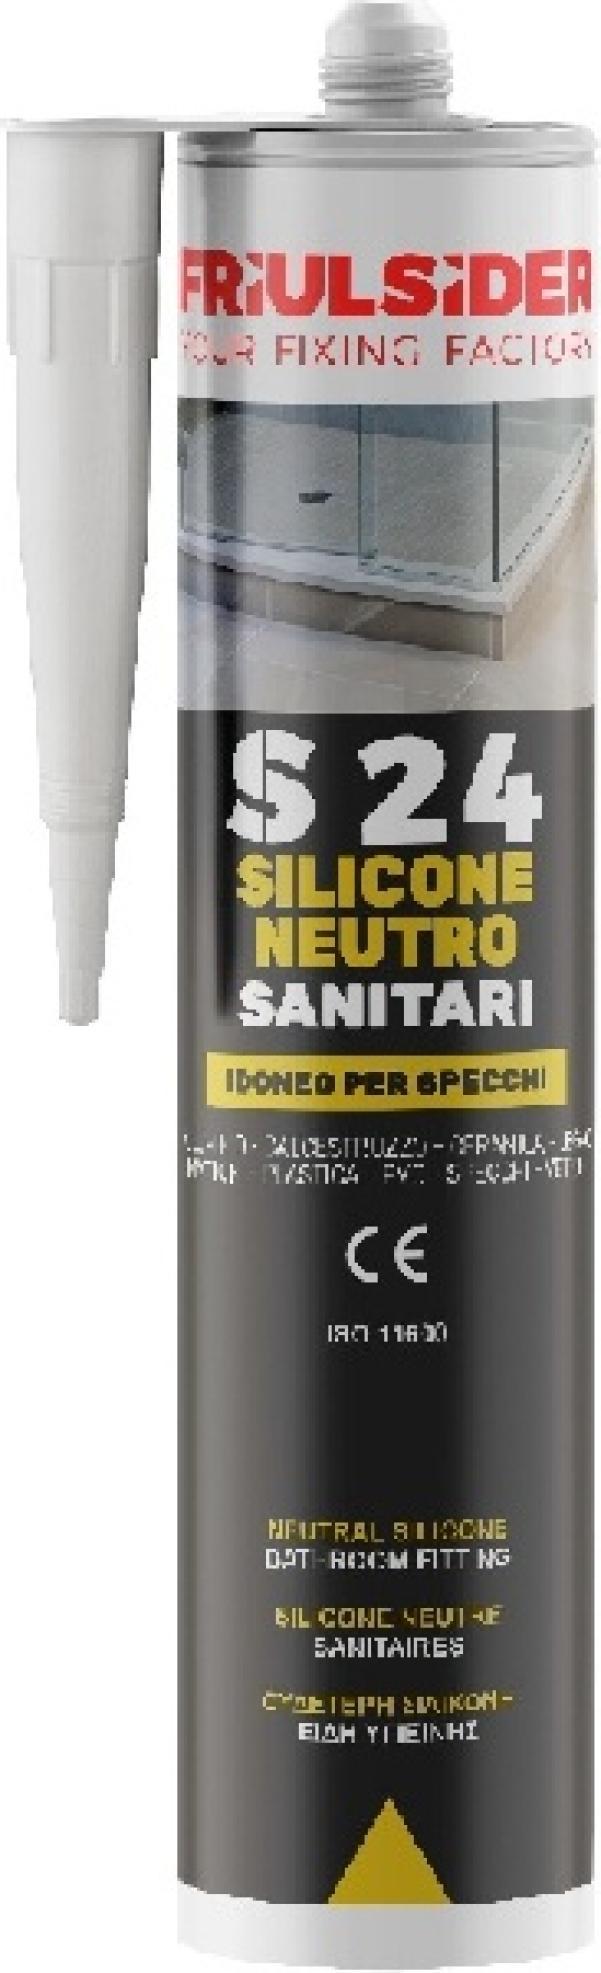 Silicone neutro sanitari trasparente 310 ml Friulsider S2400